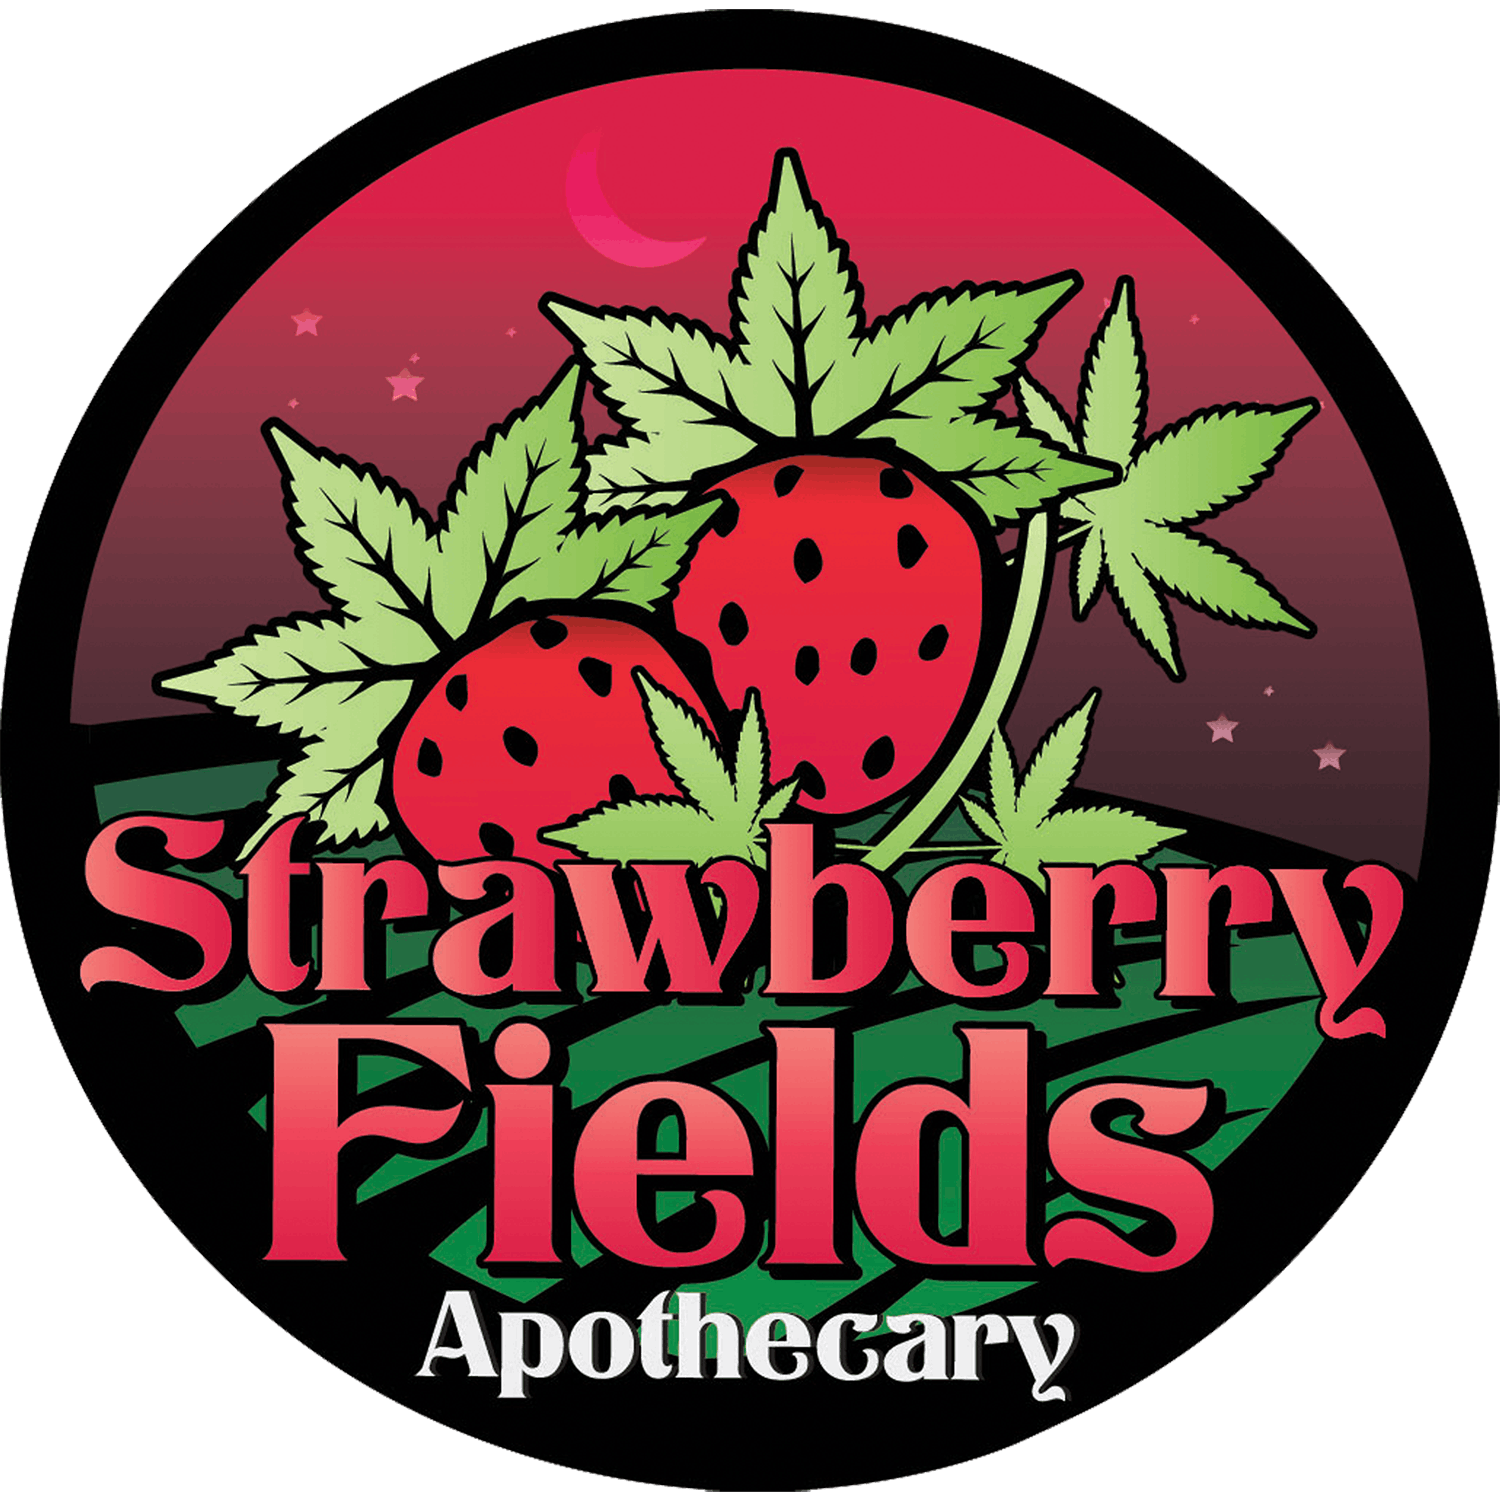 Strawberry Fields Apothecary - Medical Marijuana Doctors - Cannabizme.com